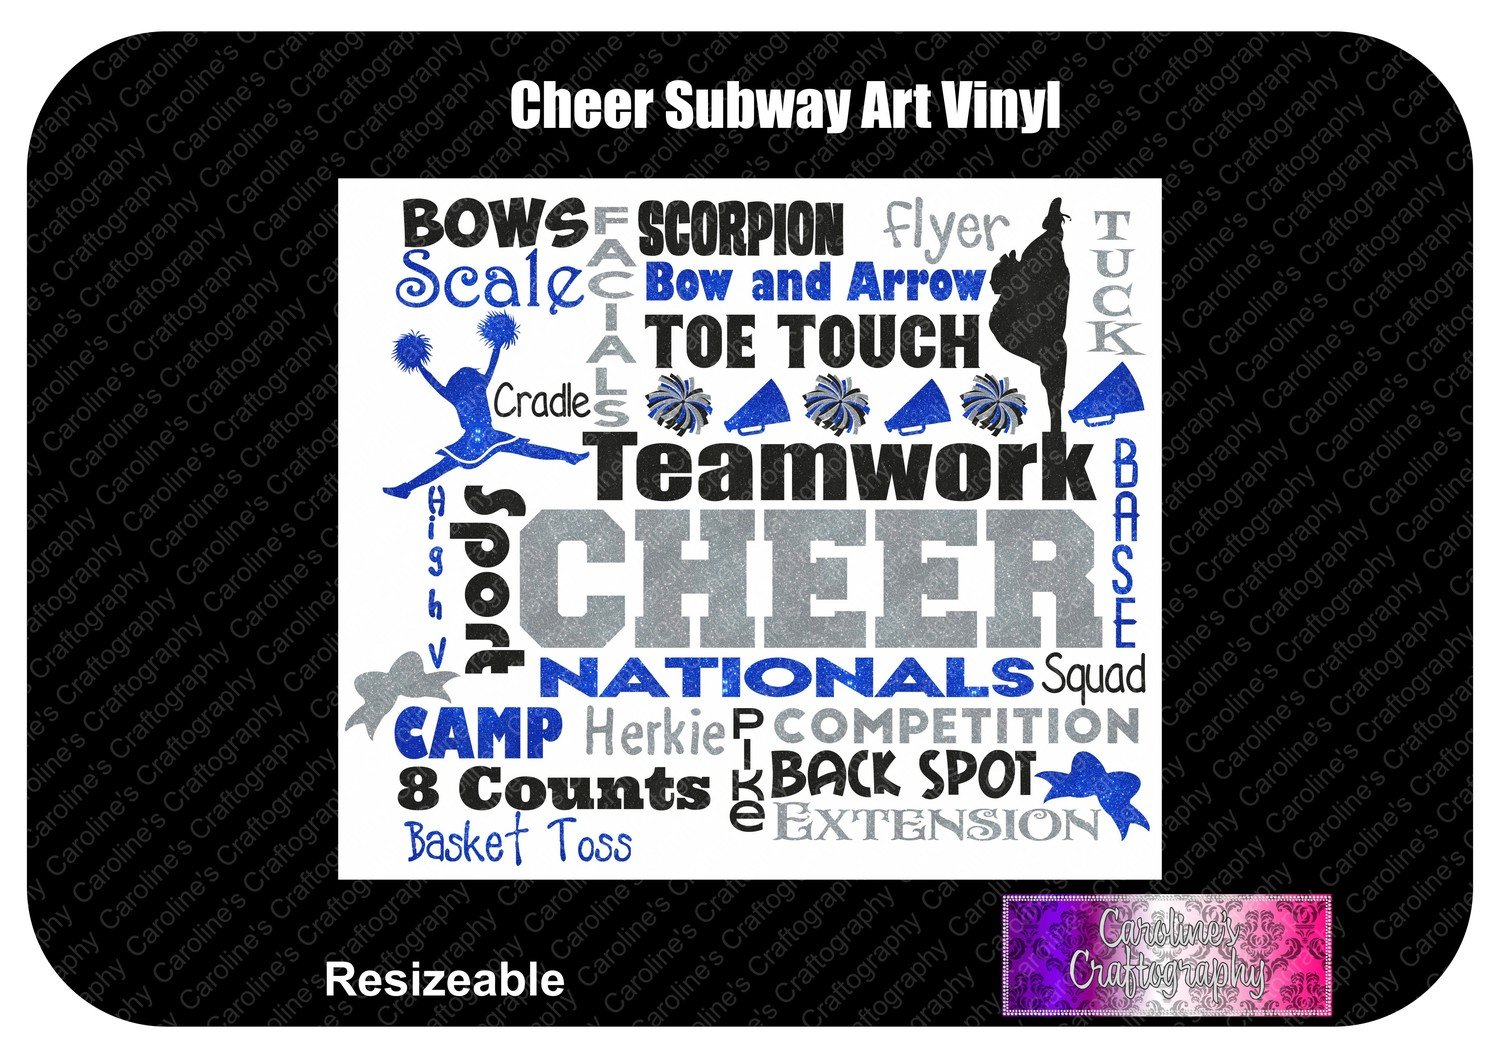 Cheer Subway Art Vinyl